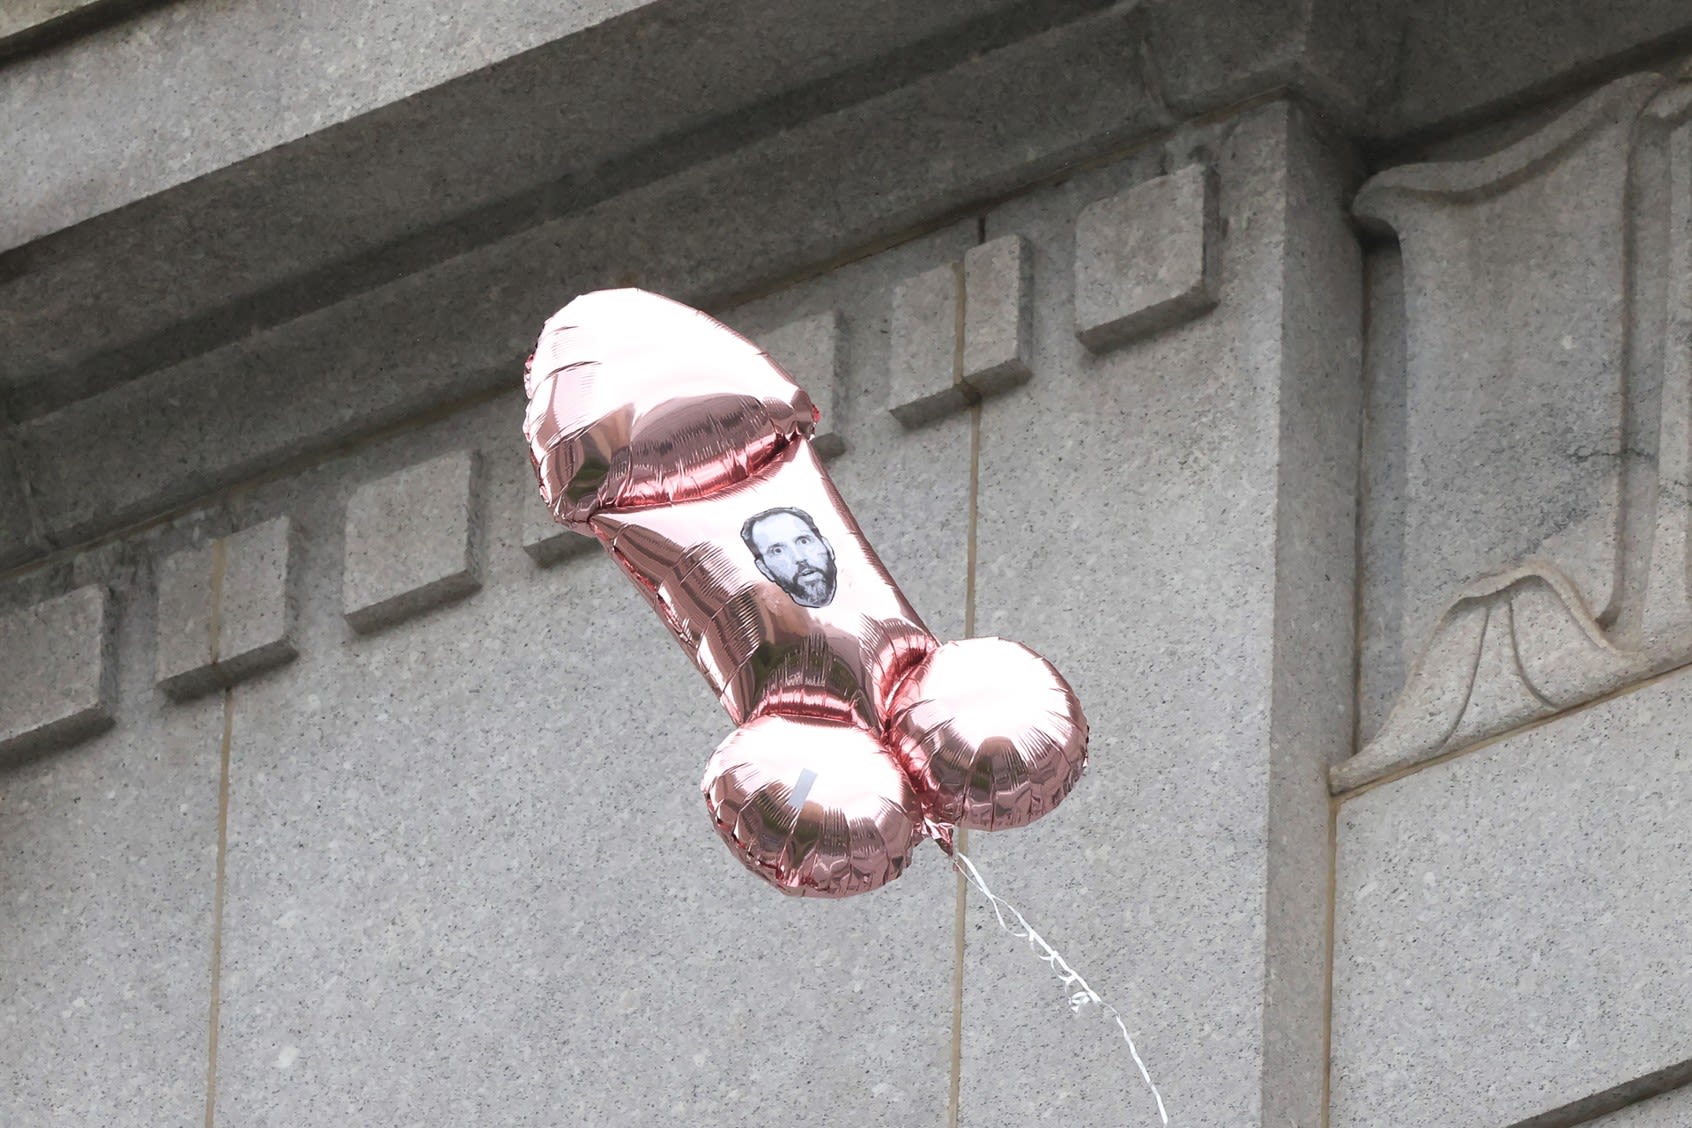 Phallic balloons and GOP allies: MAGA mobilizes as Cohen testimony comes to a close